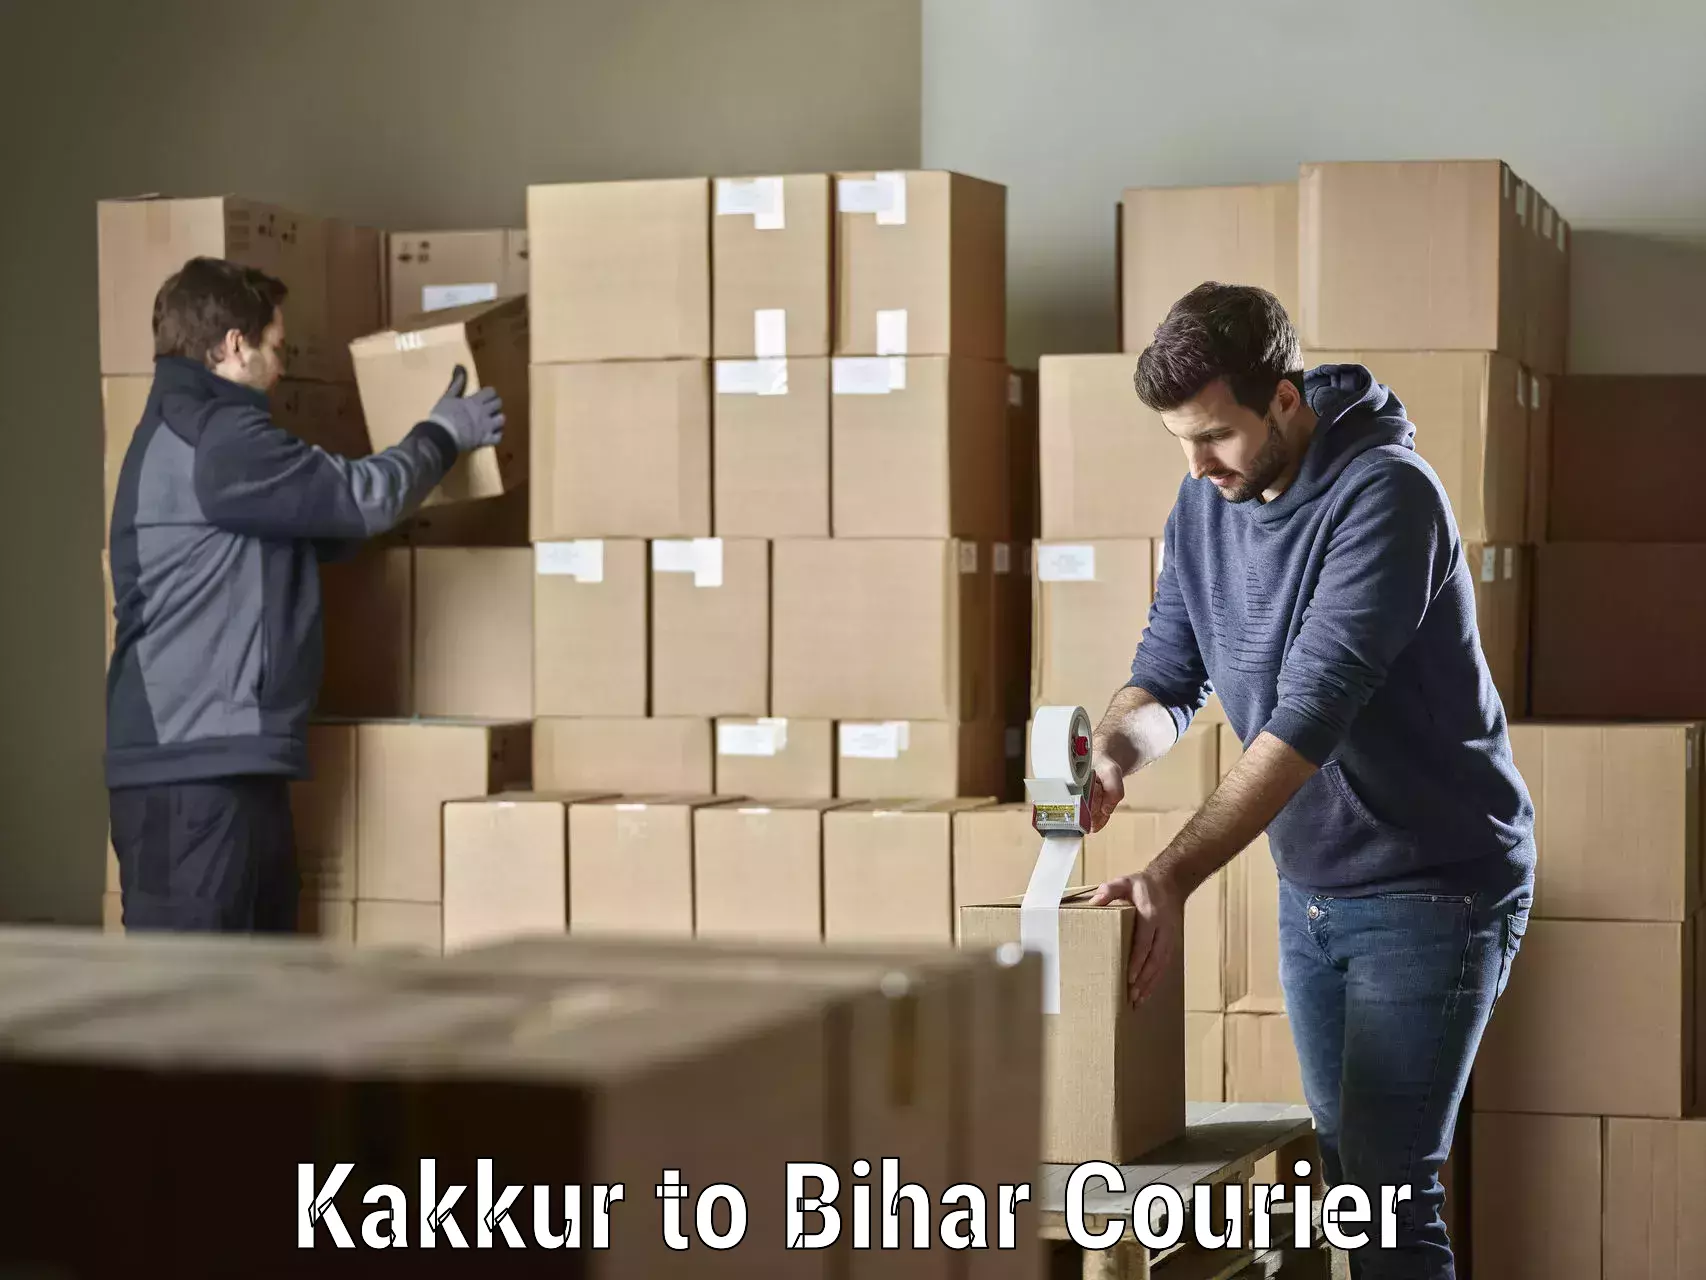 User-friendly delivery service Kakkur to Bihar